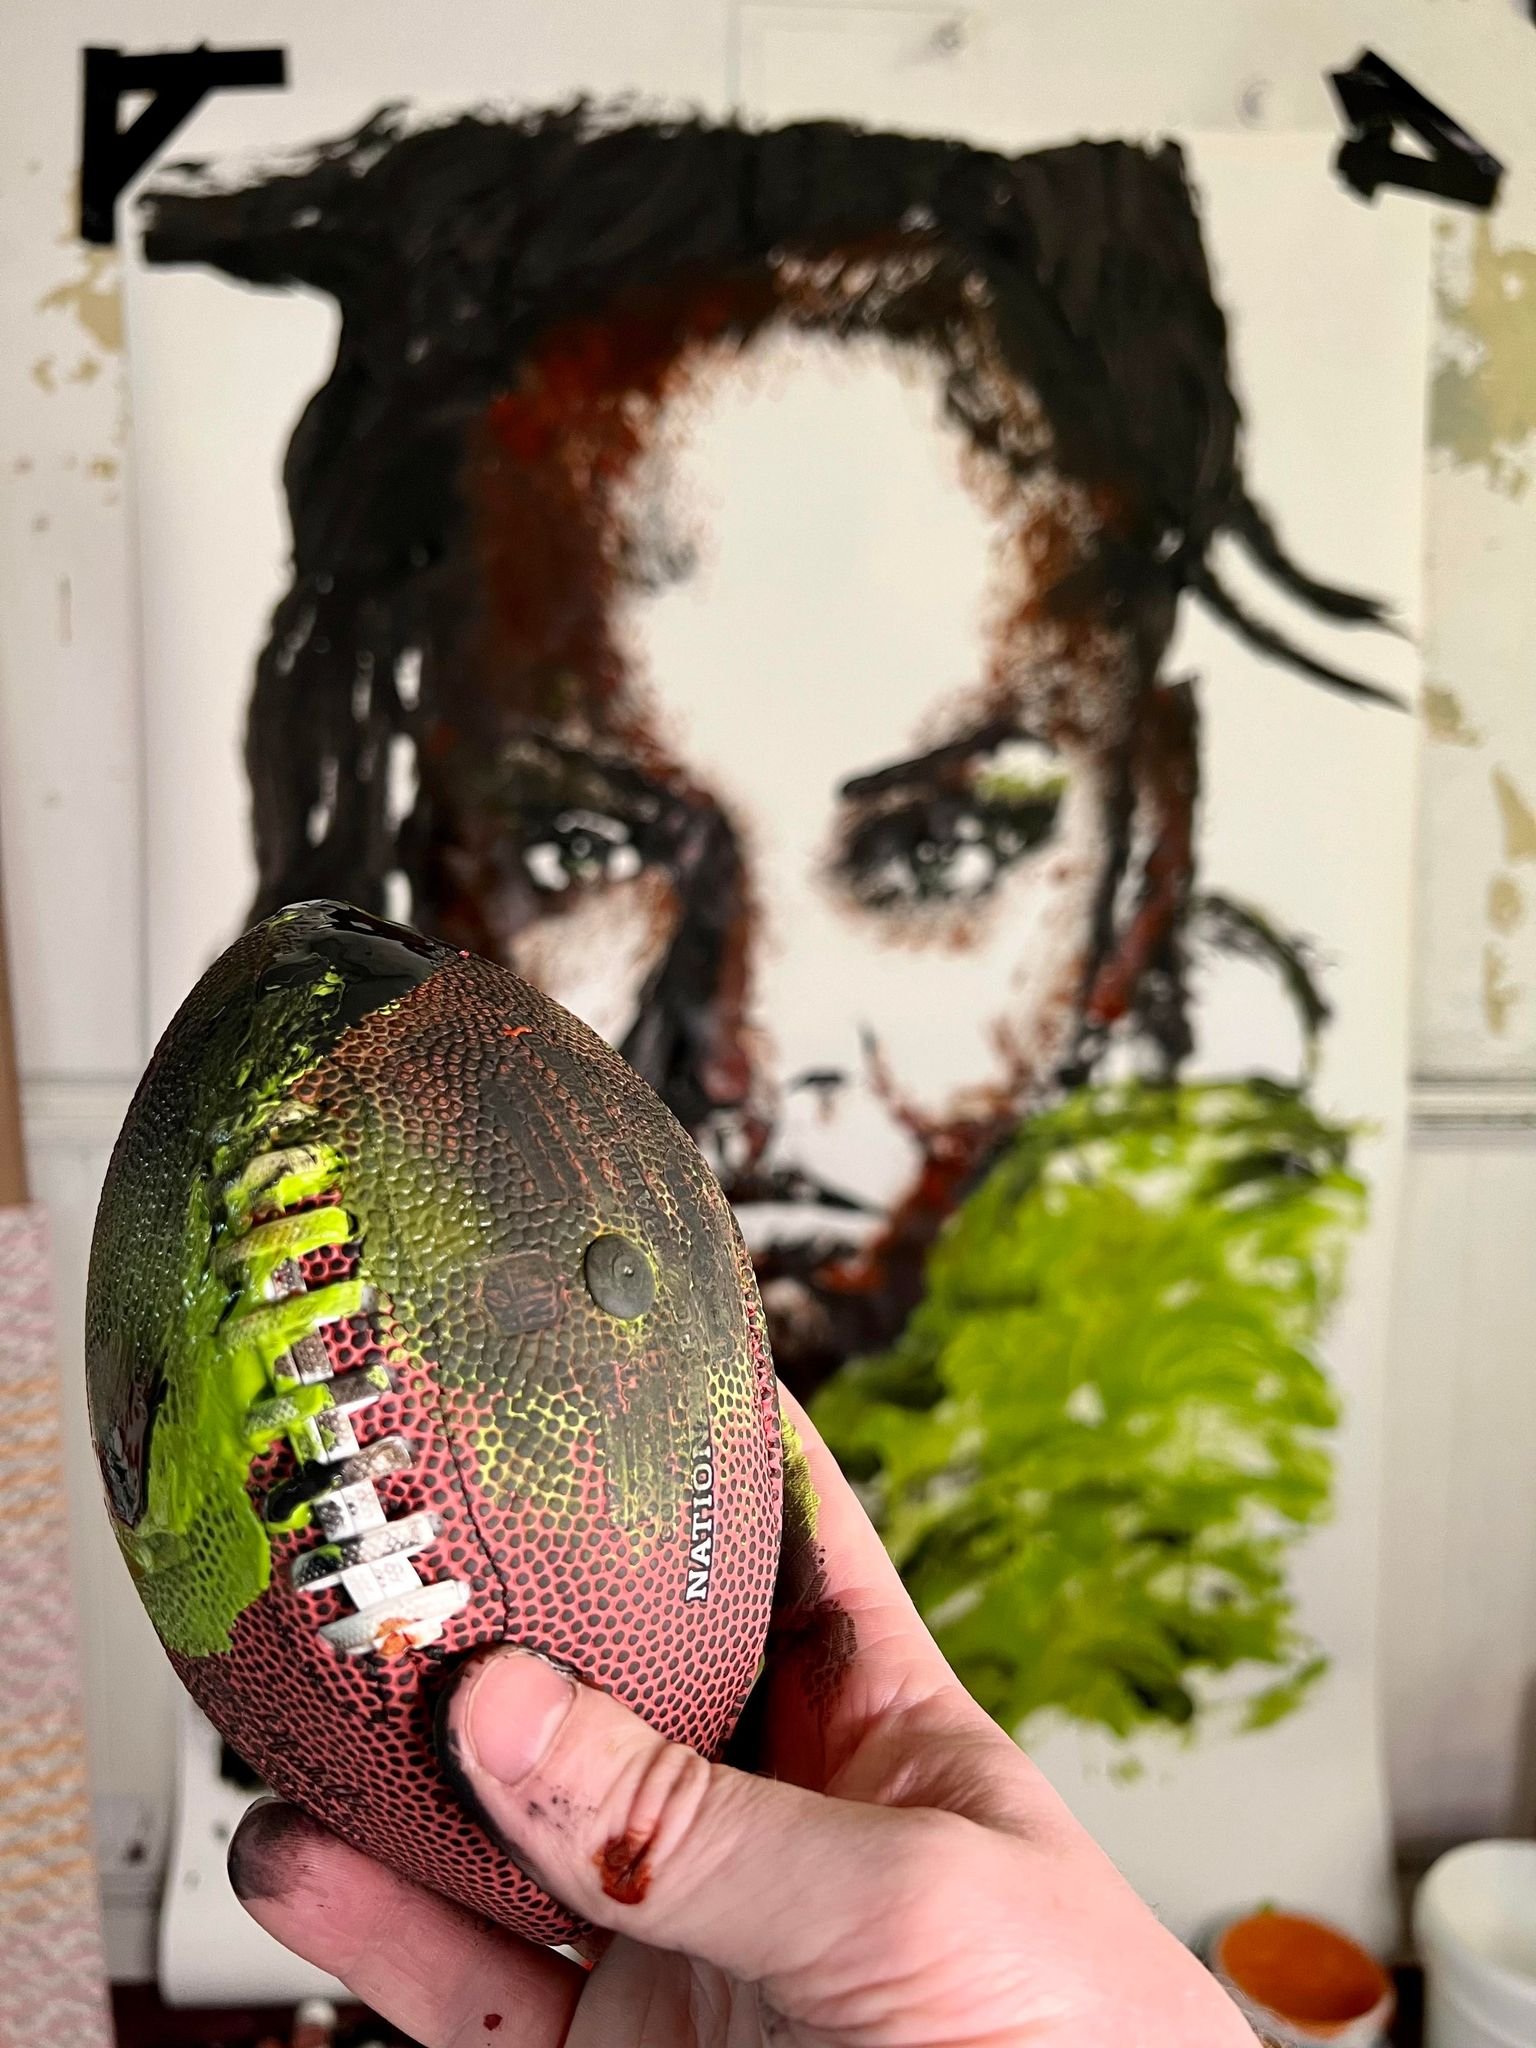 Rihanna with an American Football (Super Bowl ‘23)